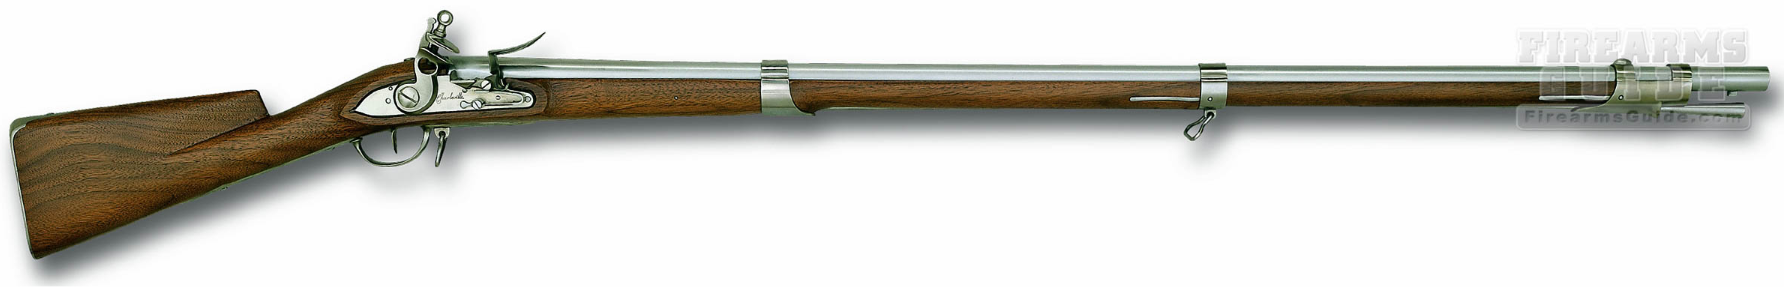 Pedersoli Léger 1763 1766 Charleville Standard Flintlock.